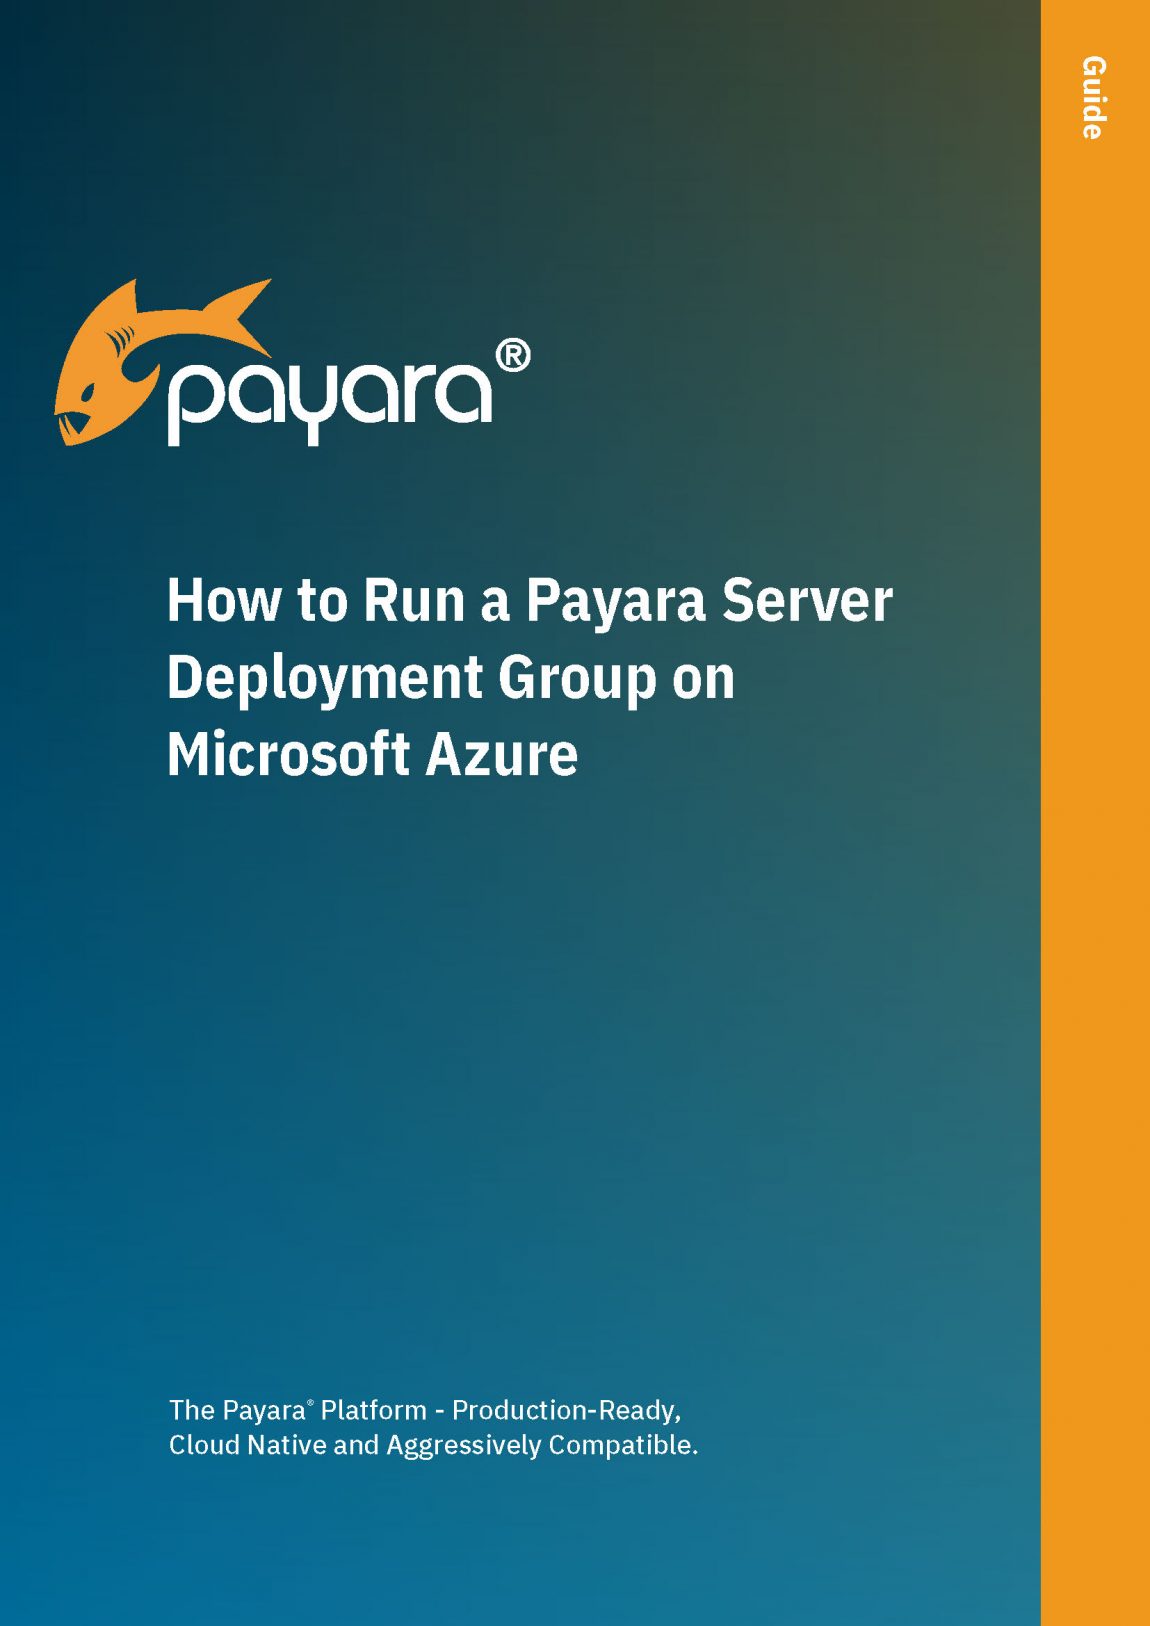 How to Run a Payara Server Deployment Group on Microsoft Azure